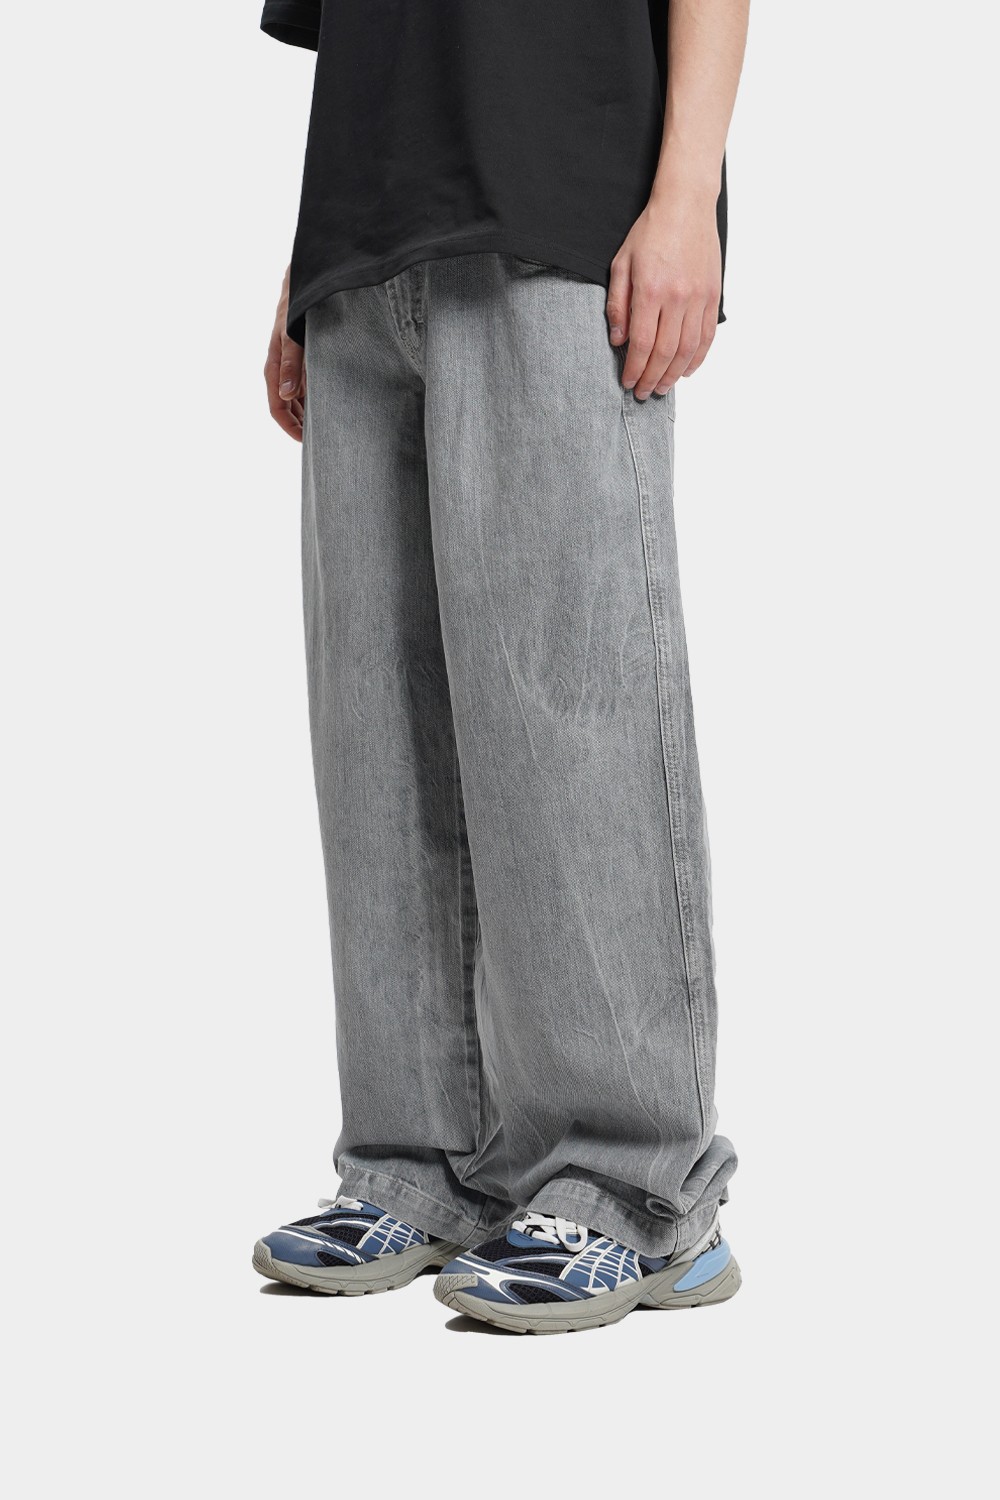 Ultra Baggy Grey Wash Neo Skate Jeans (URBN-B-206)